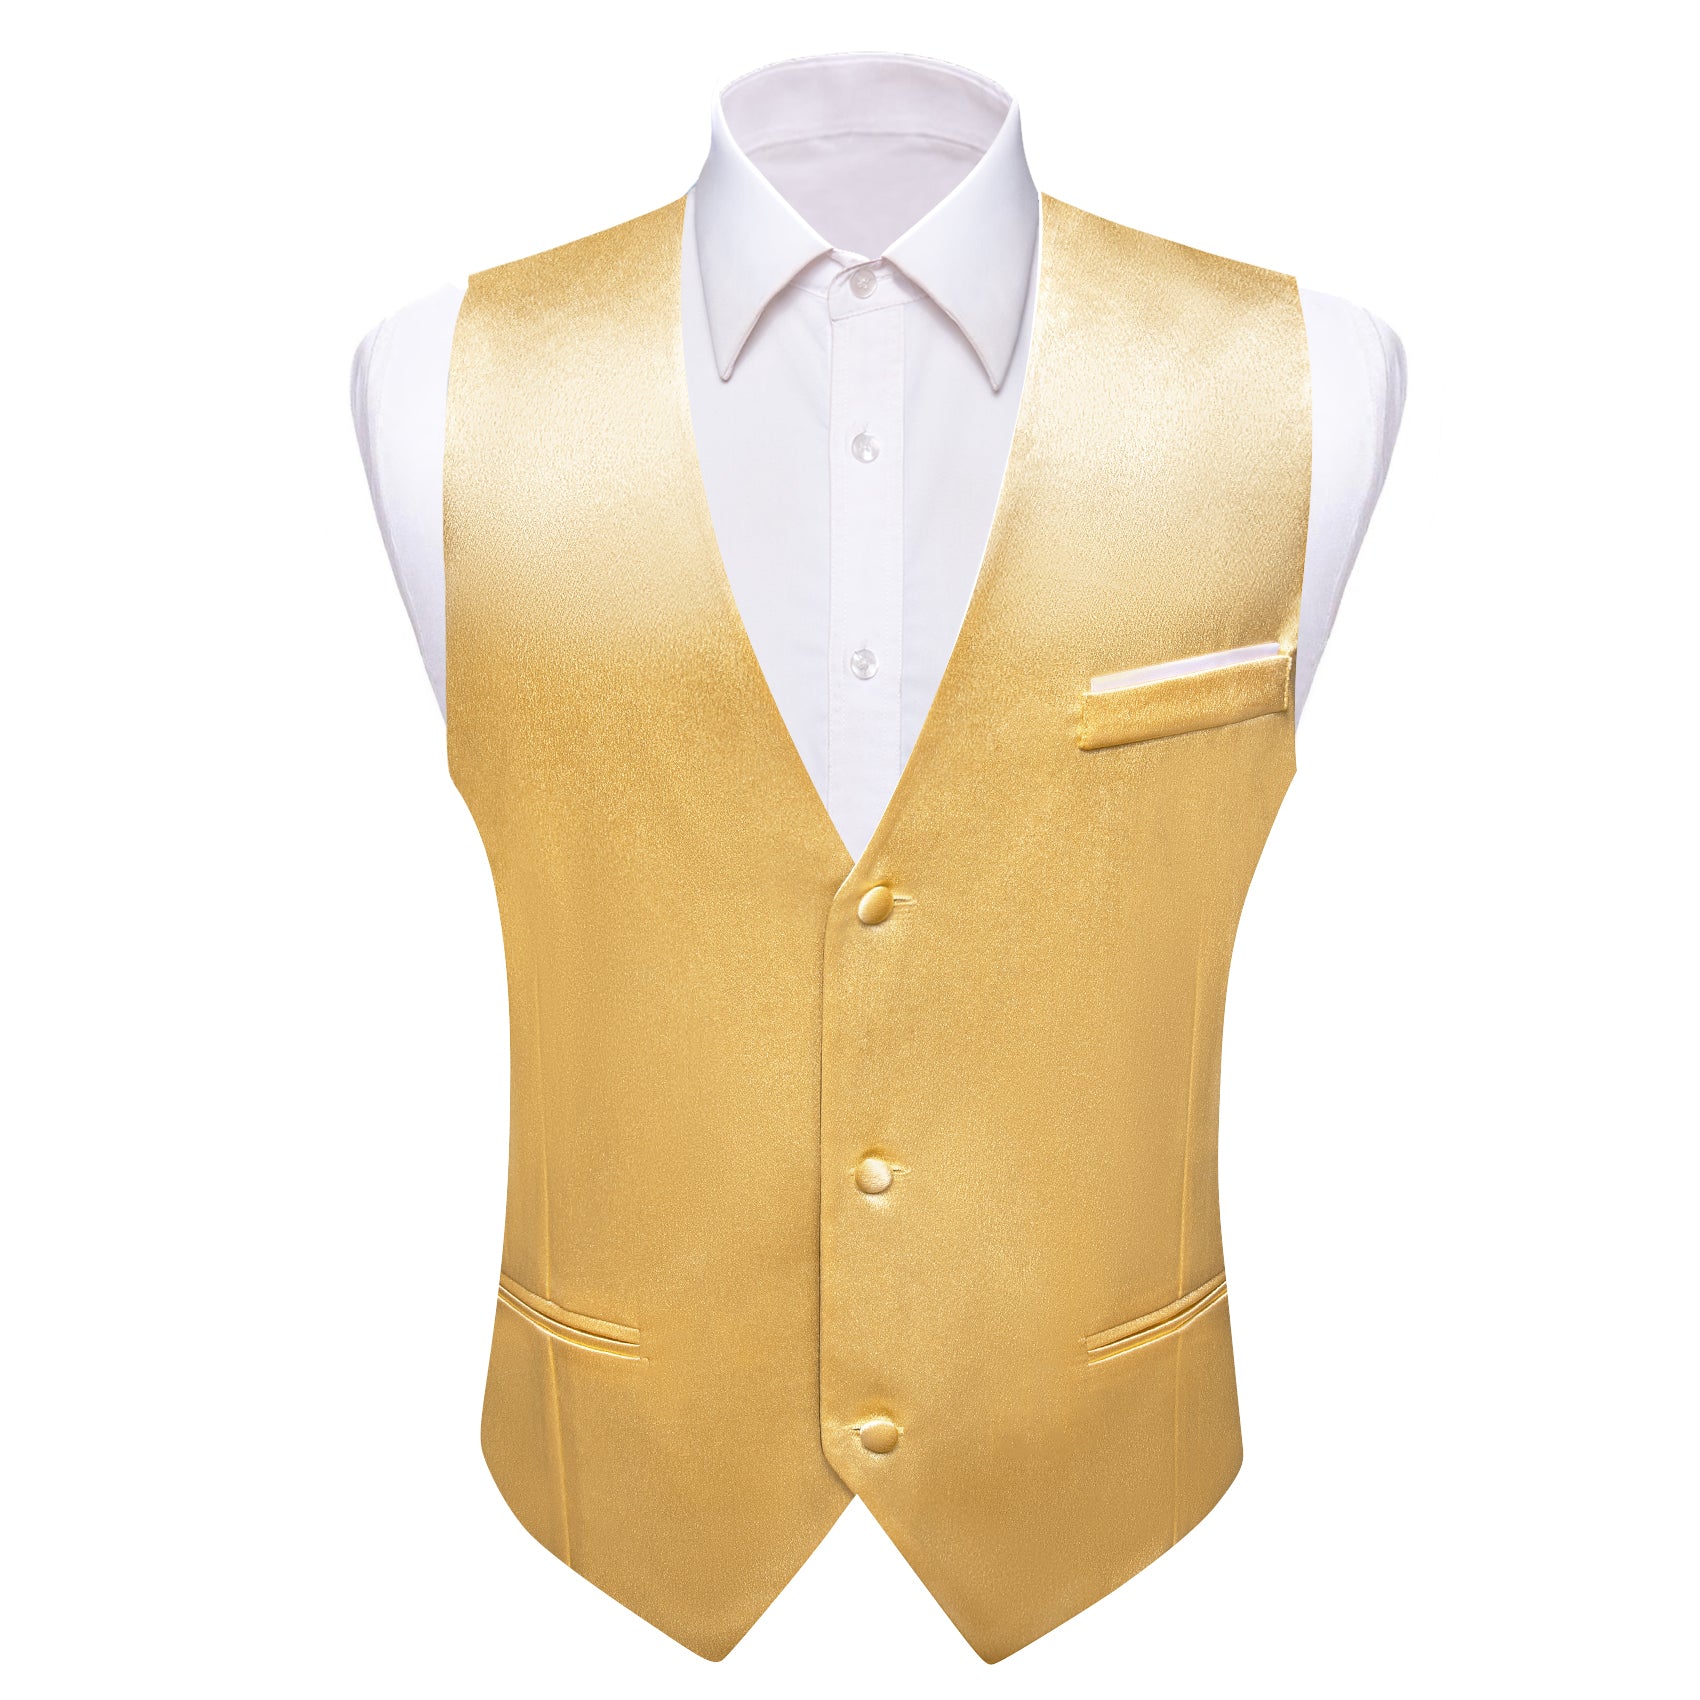 Barry.wang Gold Solid Business Vest Suit